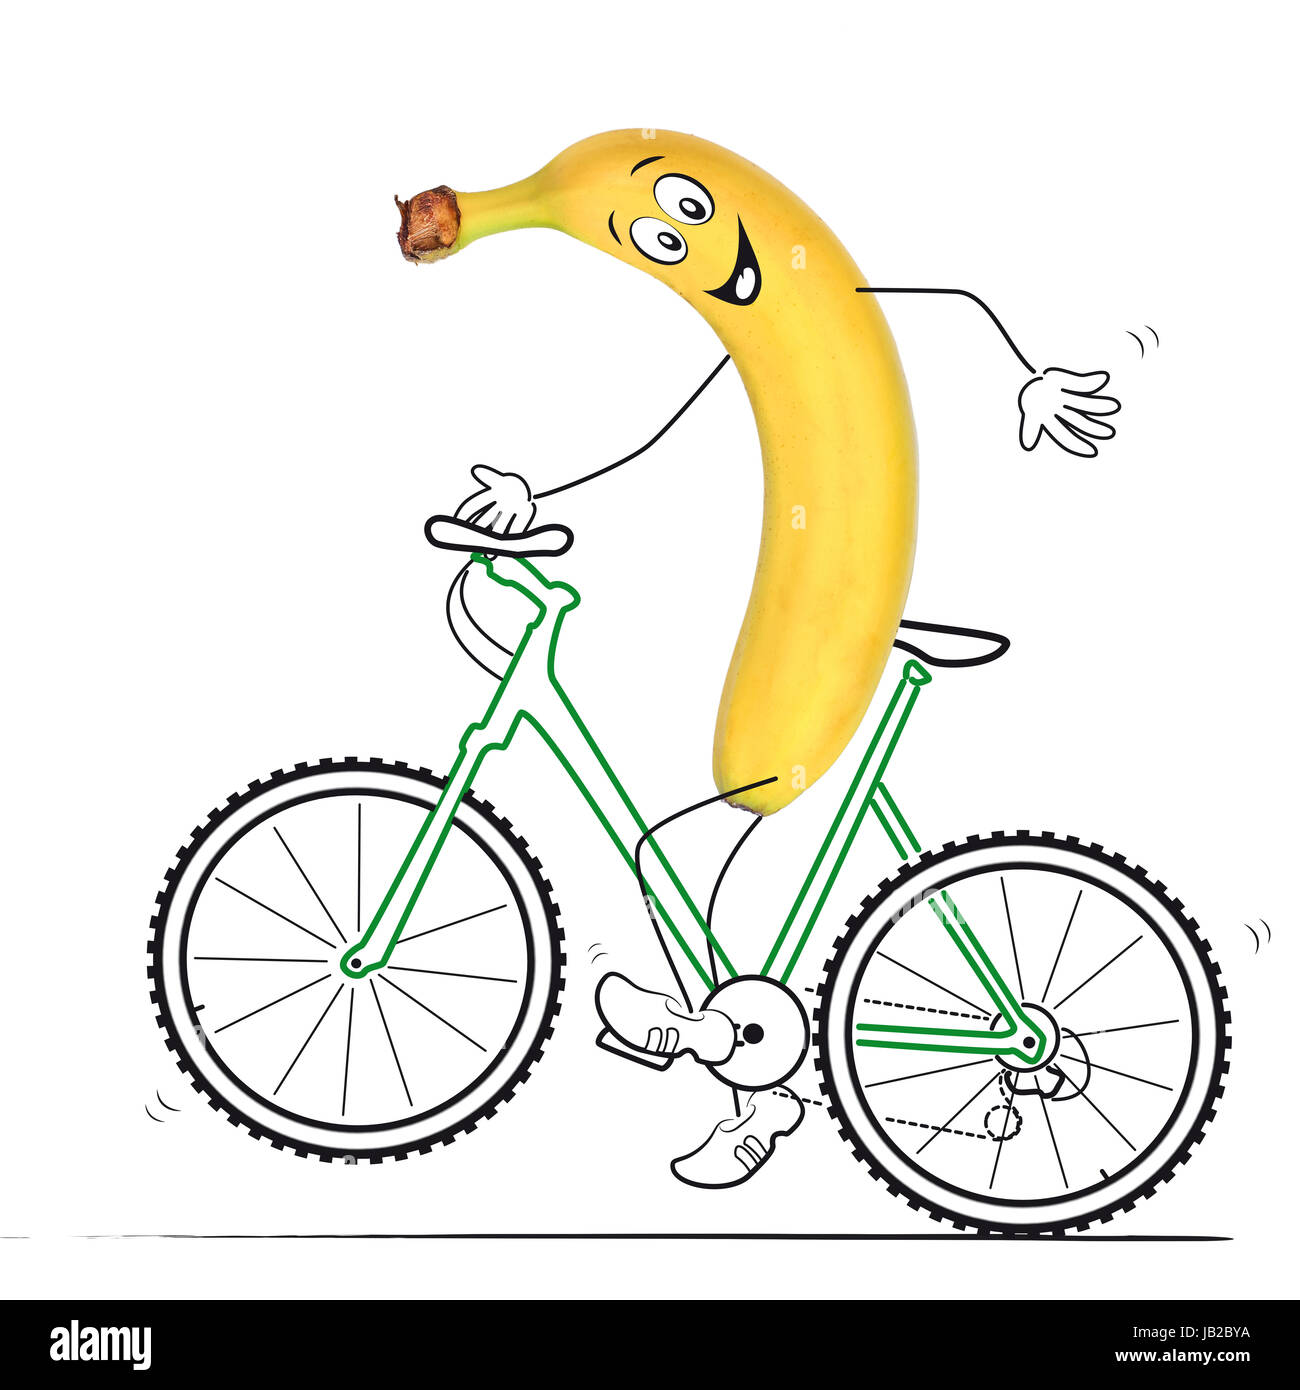 banana with bike Stock Photo